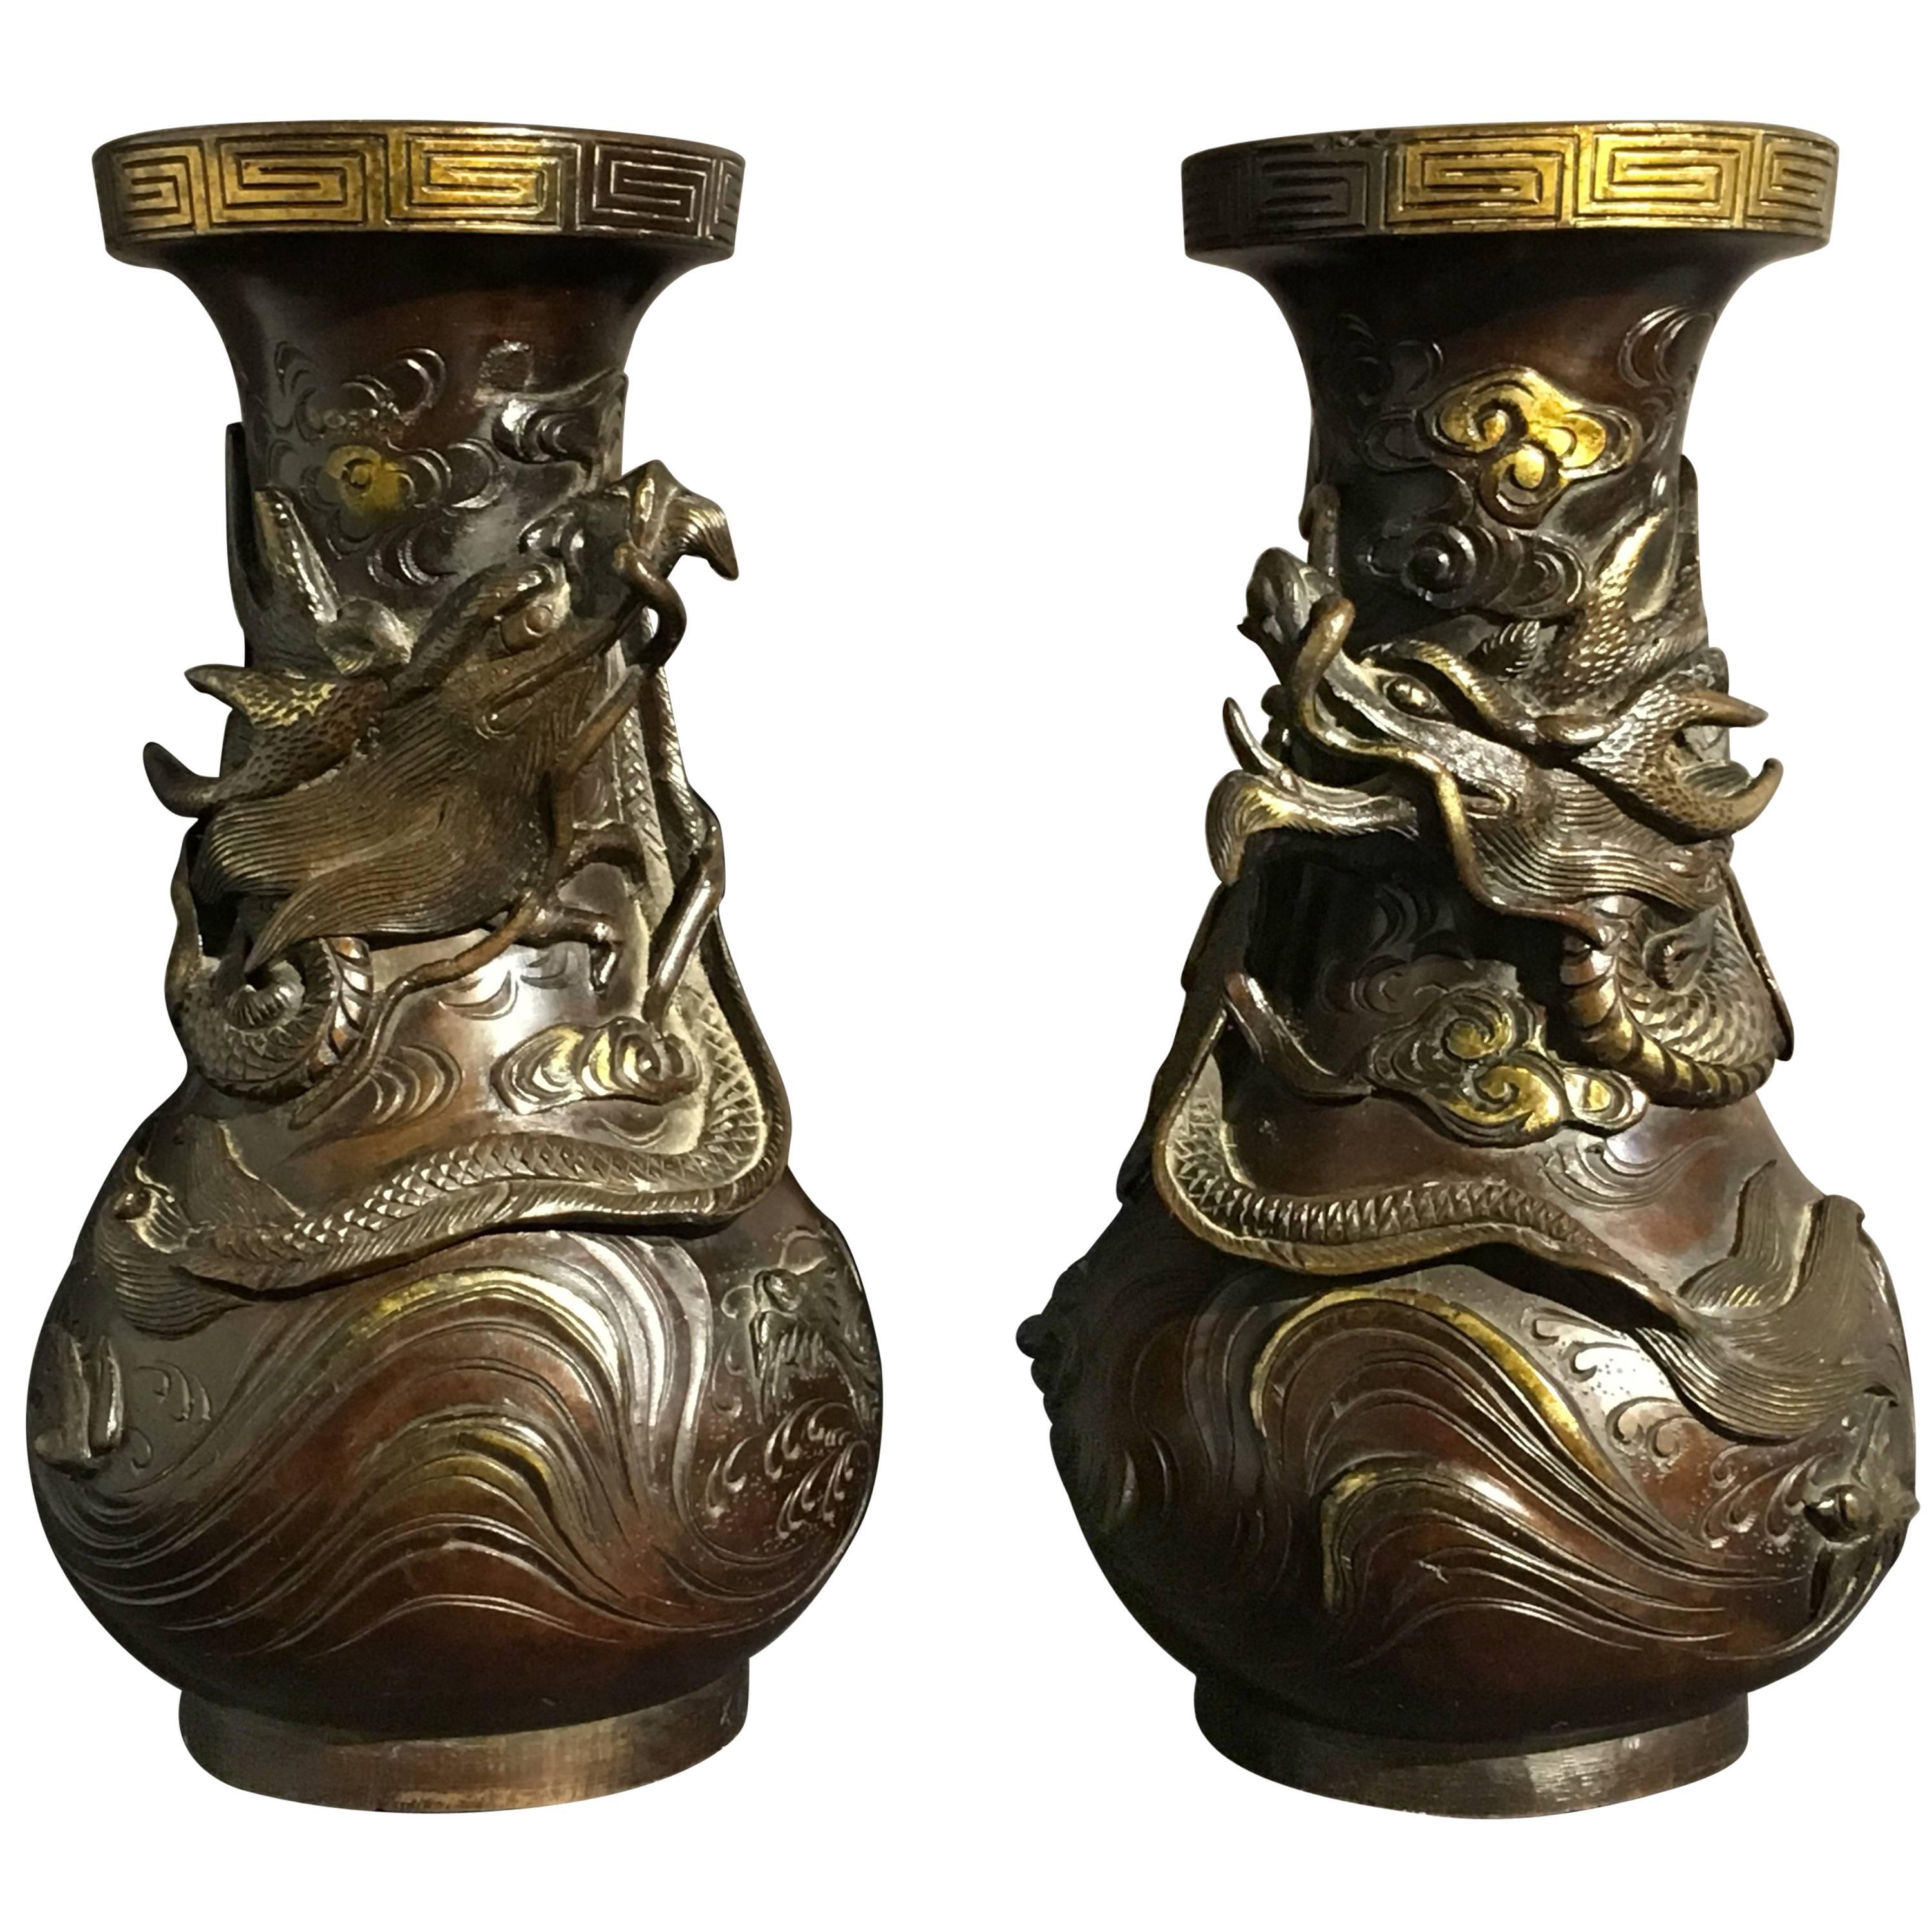 Pair of Japanese Edo Period Parcel-Gilt Bronze Dragon Vases, Early 19th Century